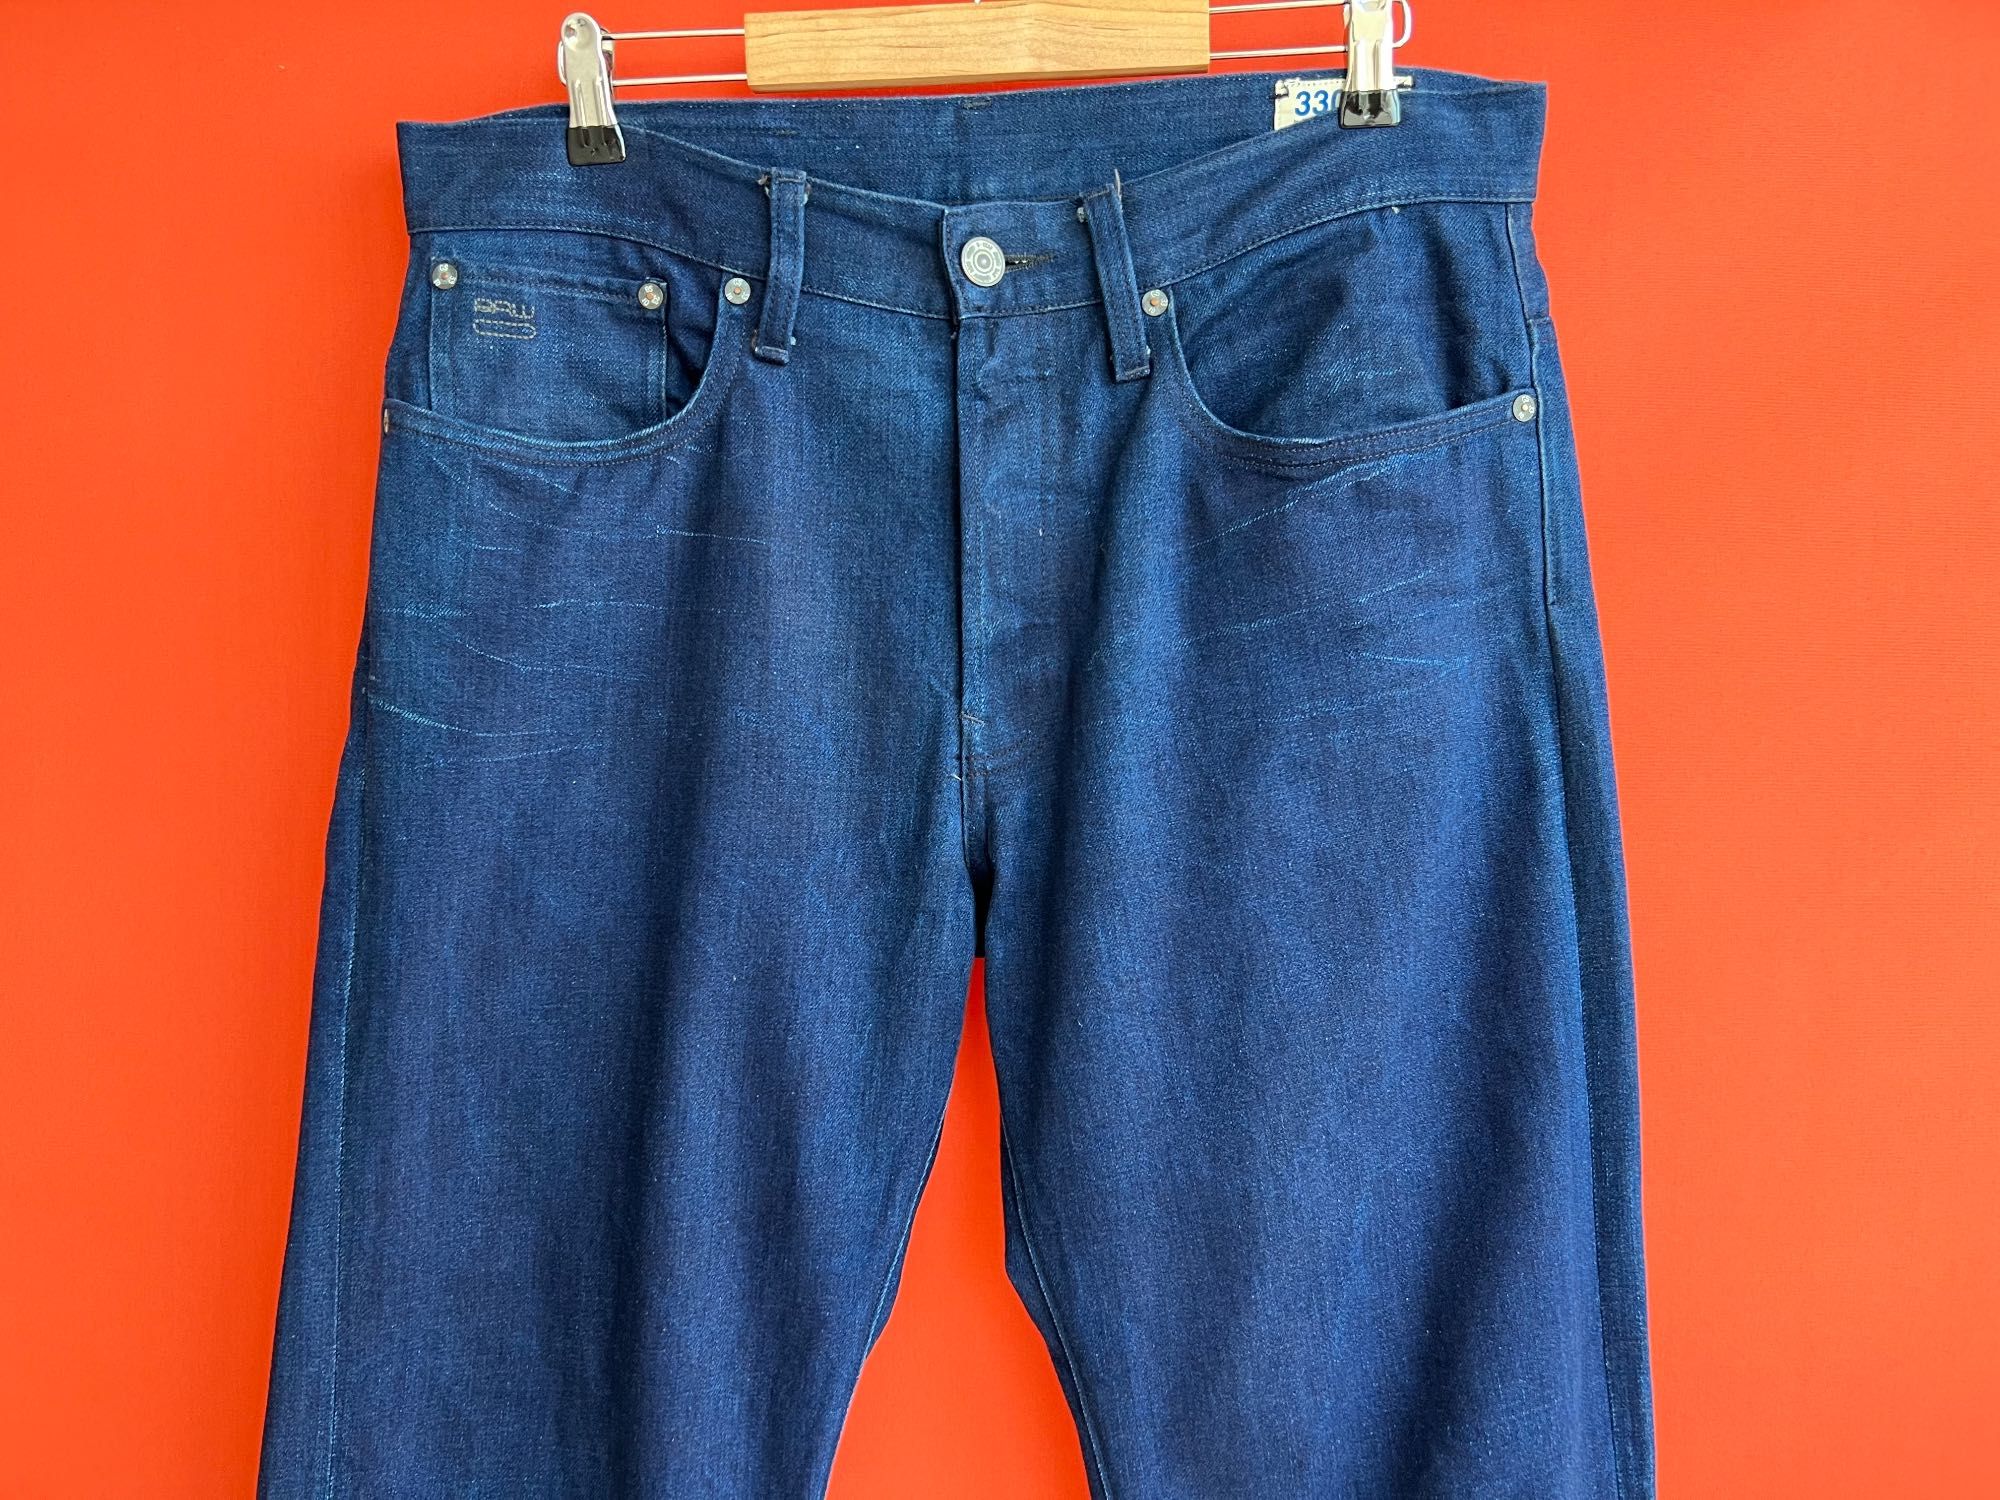 G-Star Raw 3301 Staright мужские джинсы штаны размер 33 34 Б У